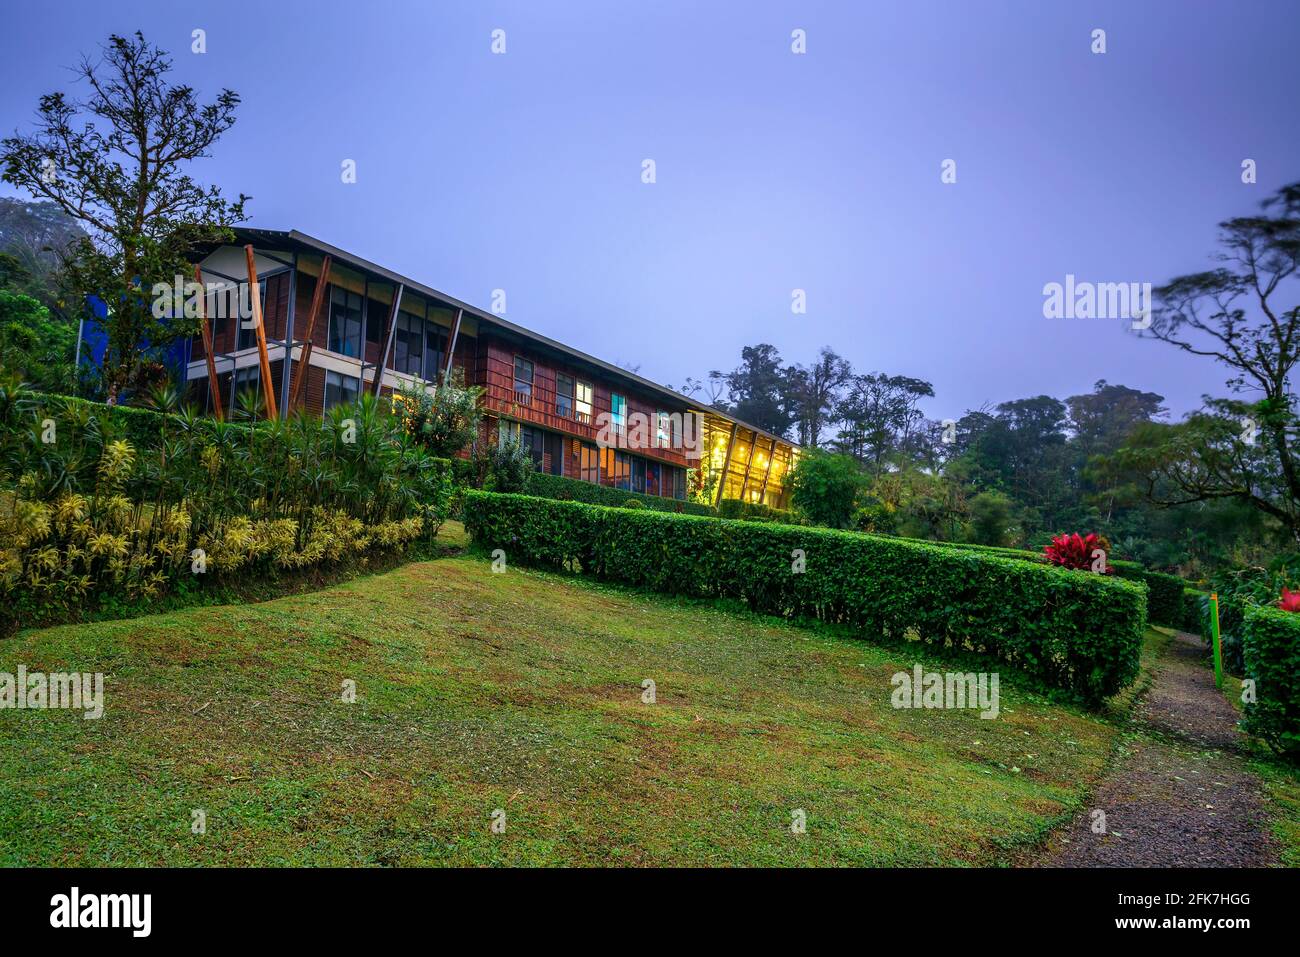 Celeste Mountain Lodge located in the rainforest of Costa Rica Stock Photo